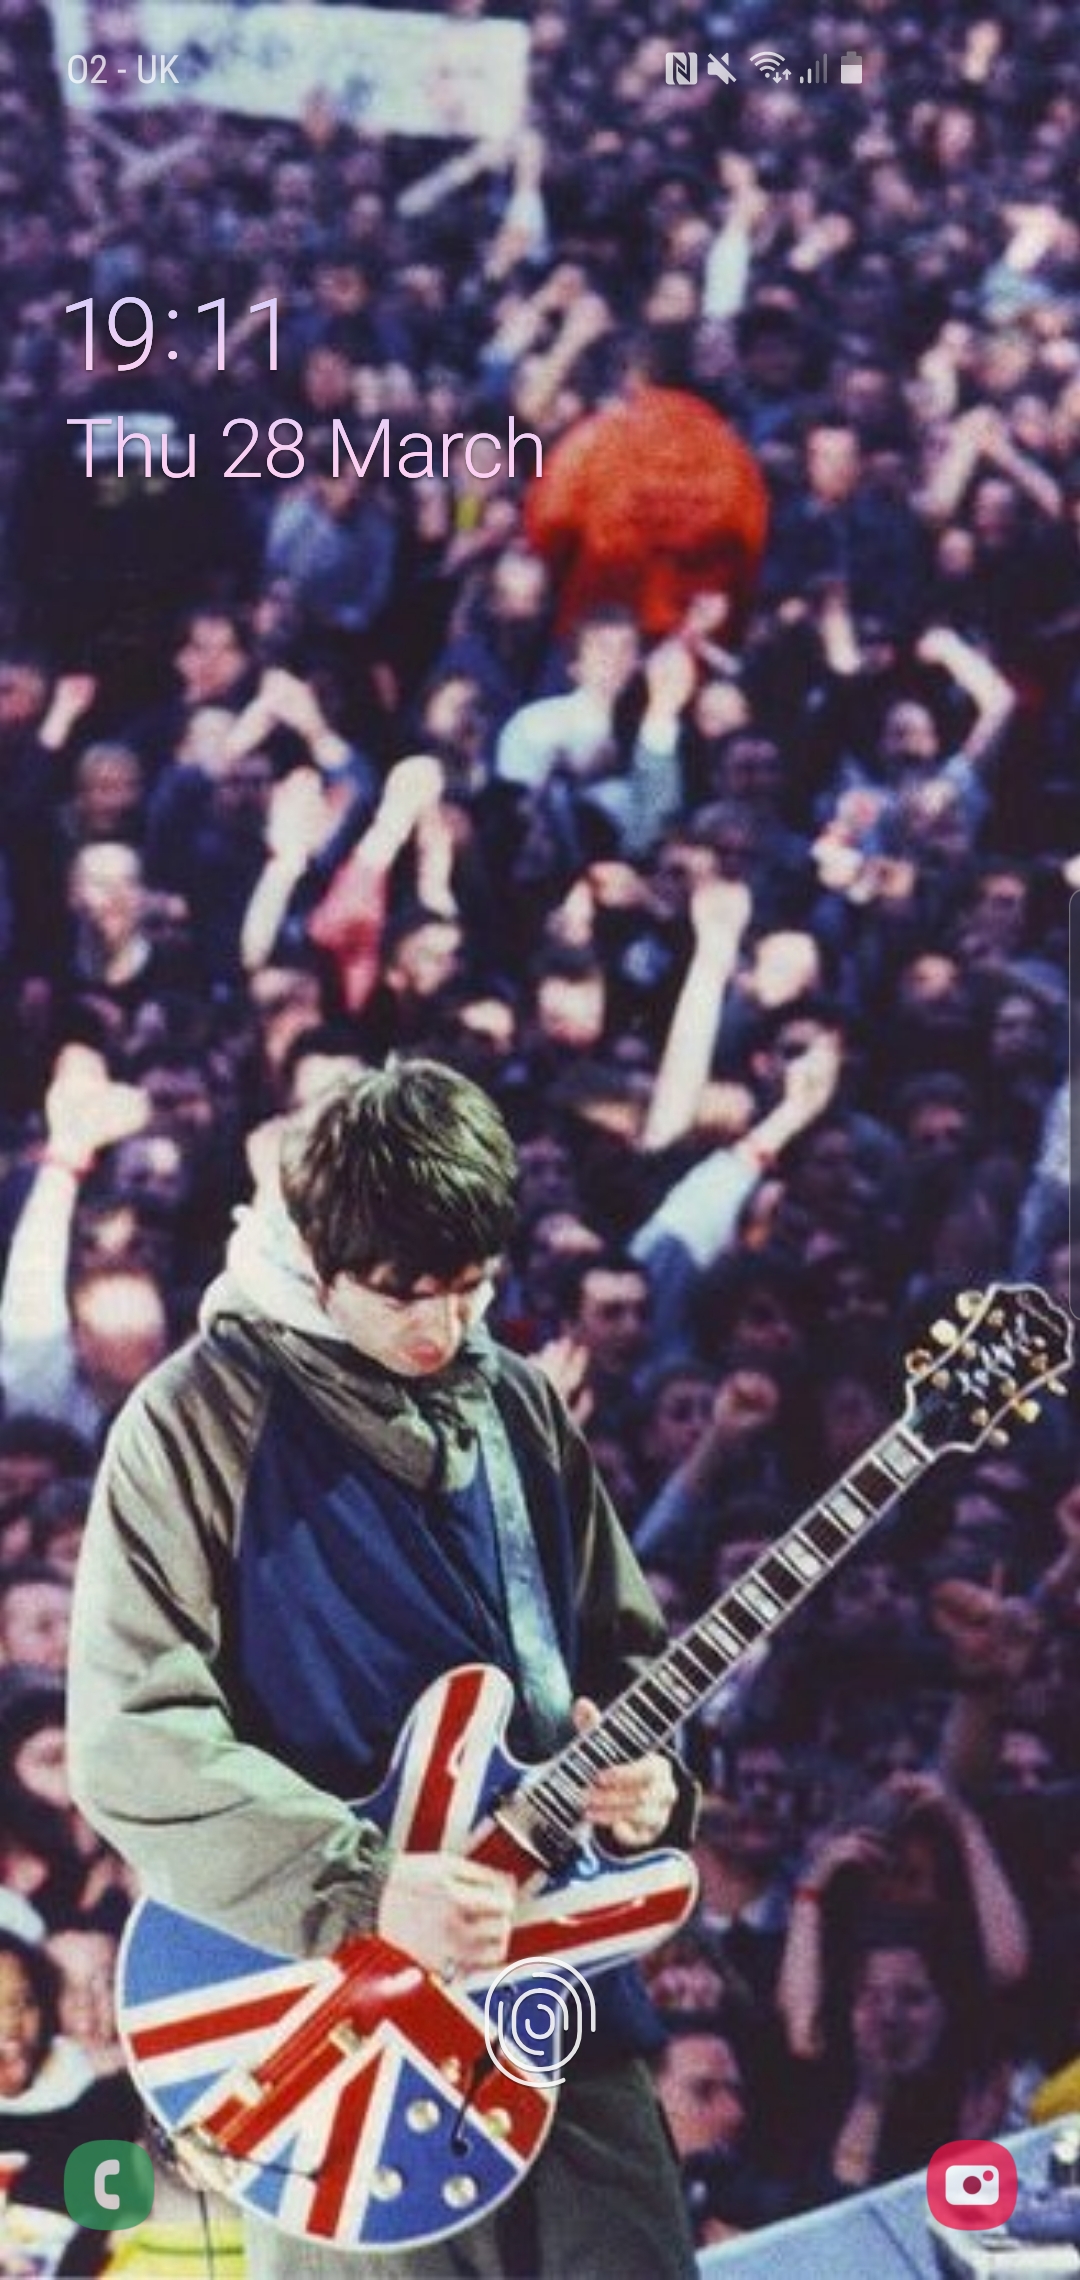 Noel Gallagher Wallpapers